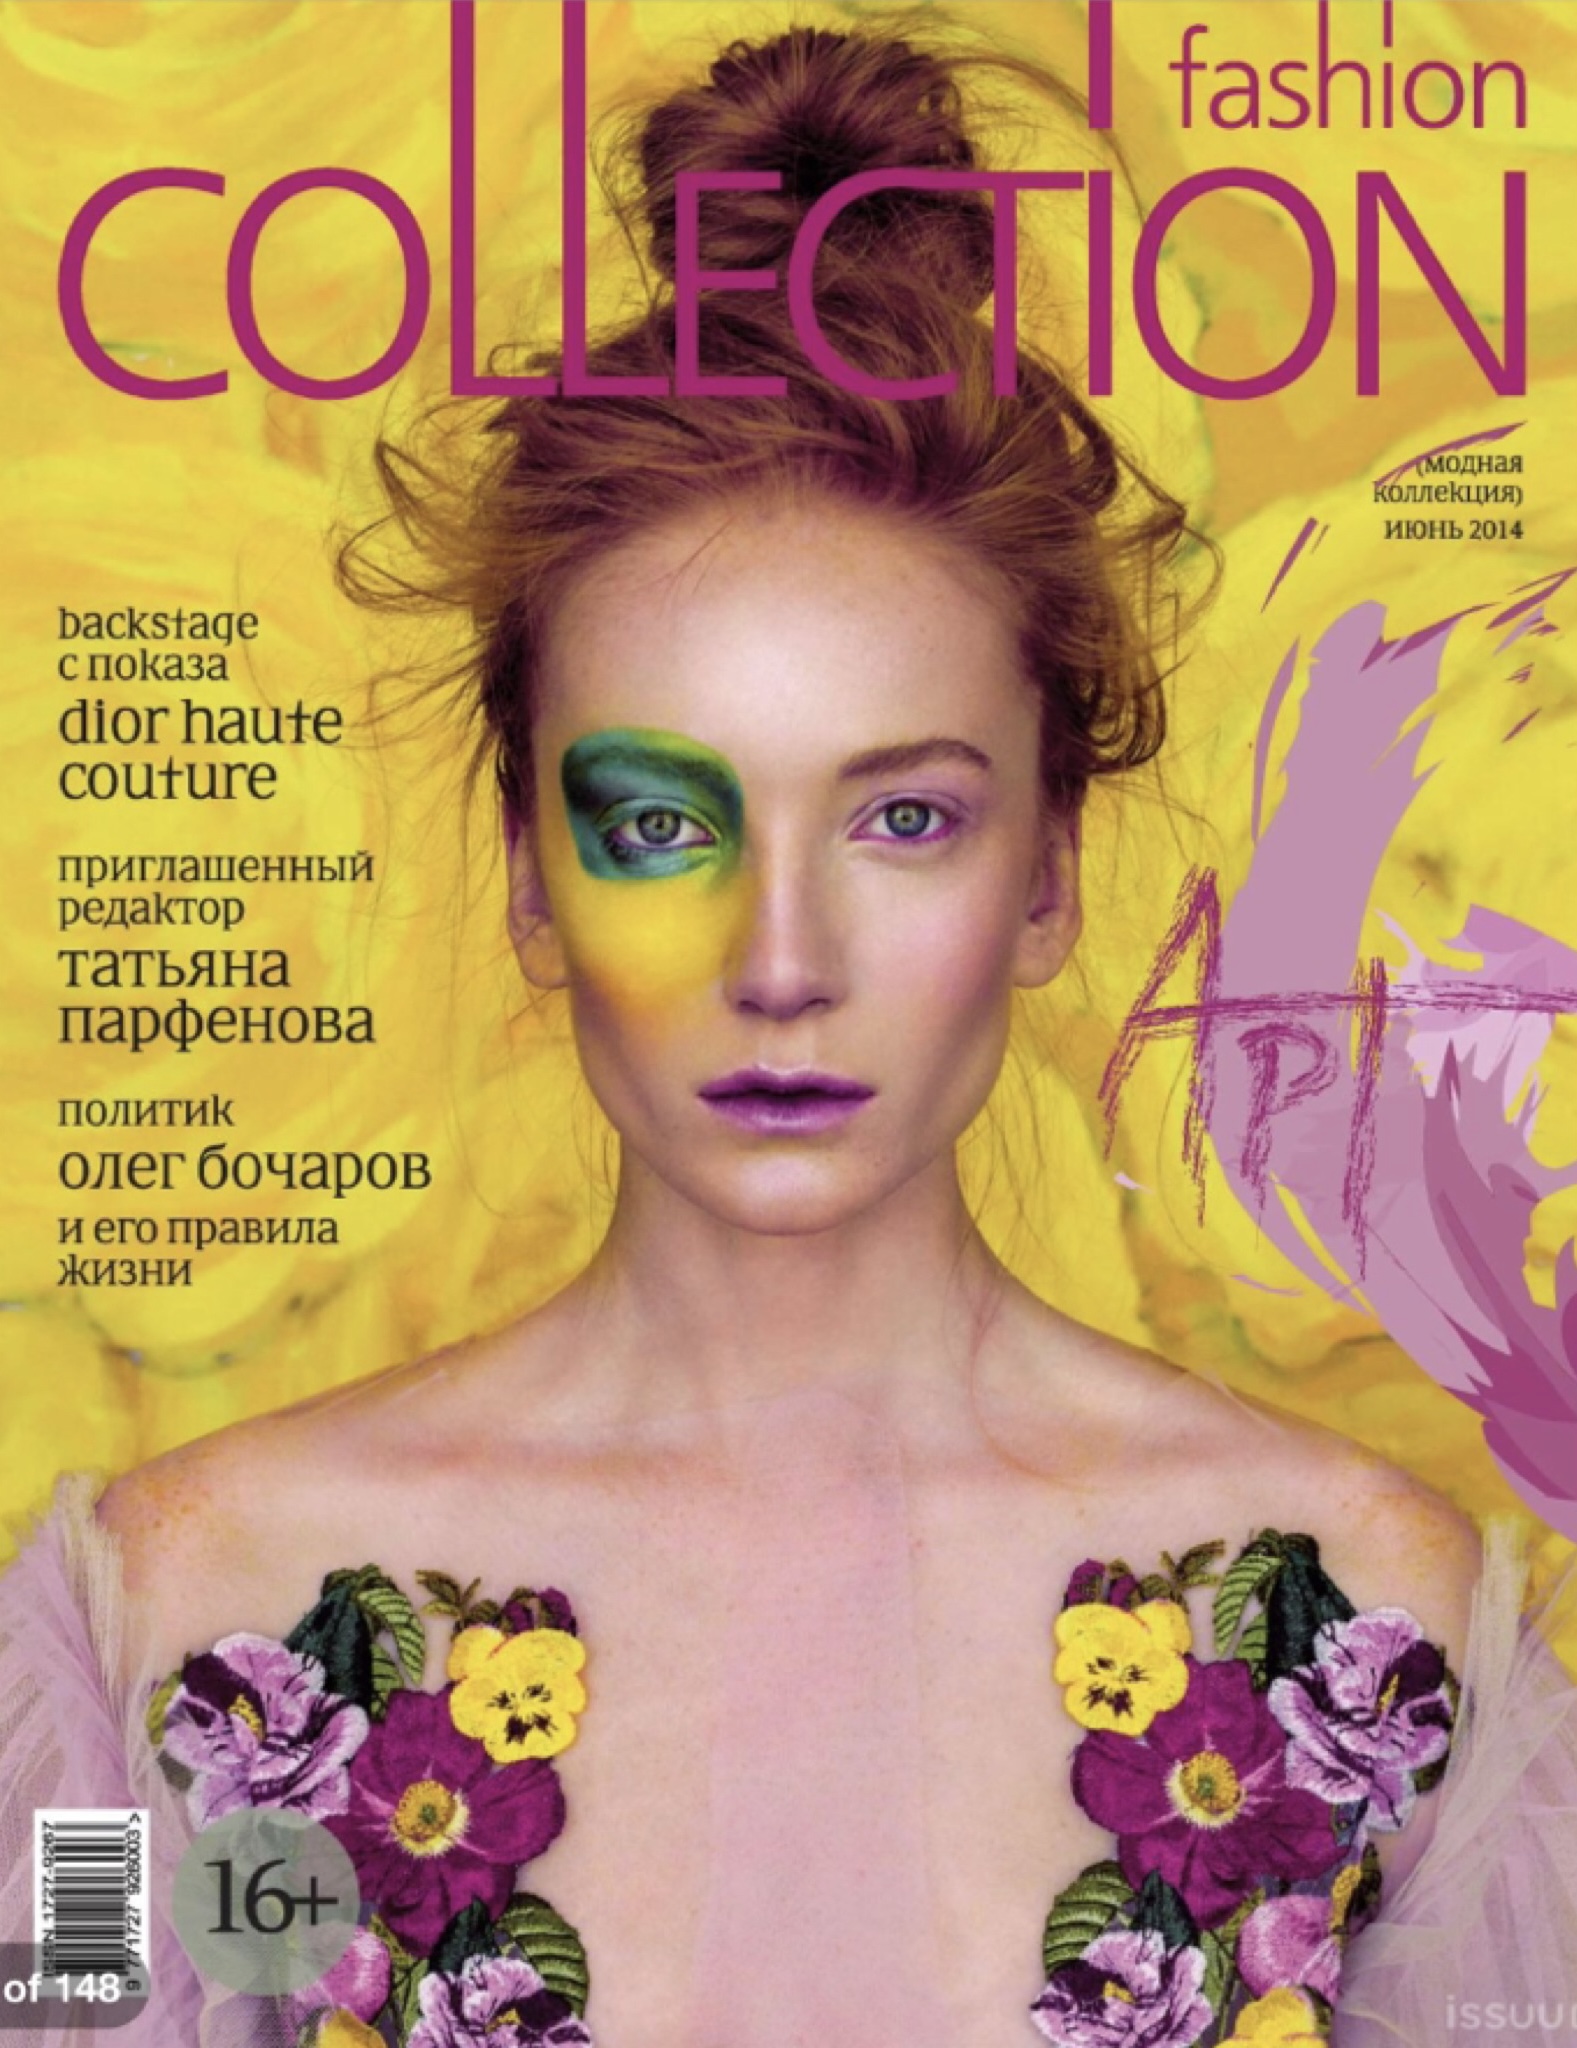 Collection журнал. Фэшн журналы. Обложки модных журналов. Обложки Fashion журналов. Журнал Fashion collection.